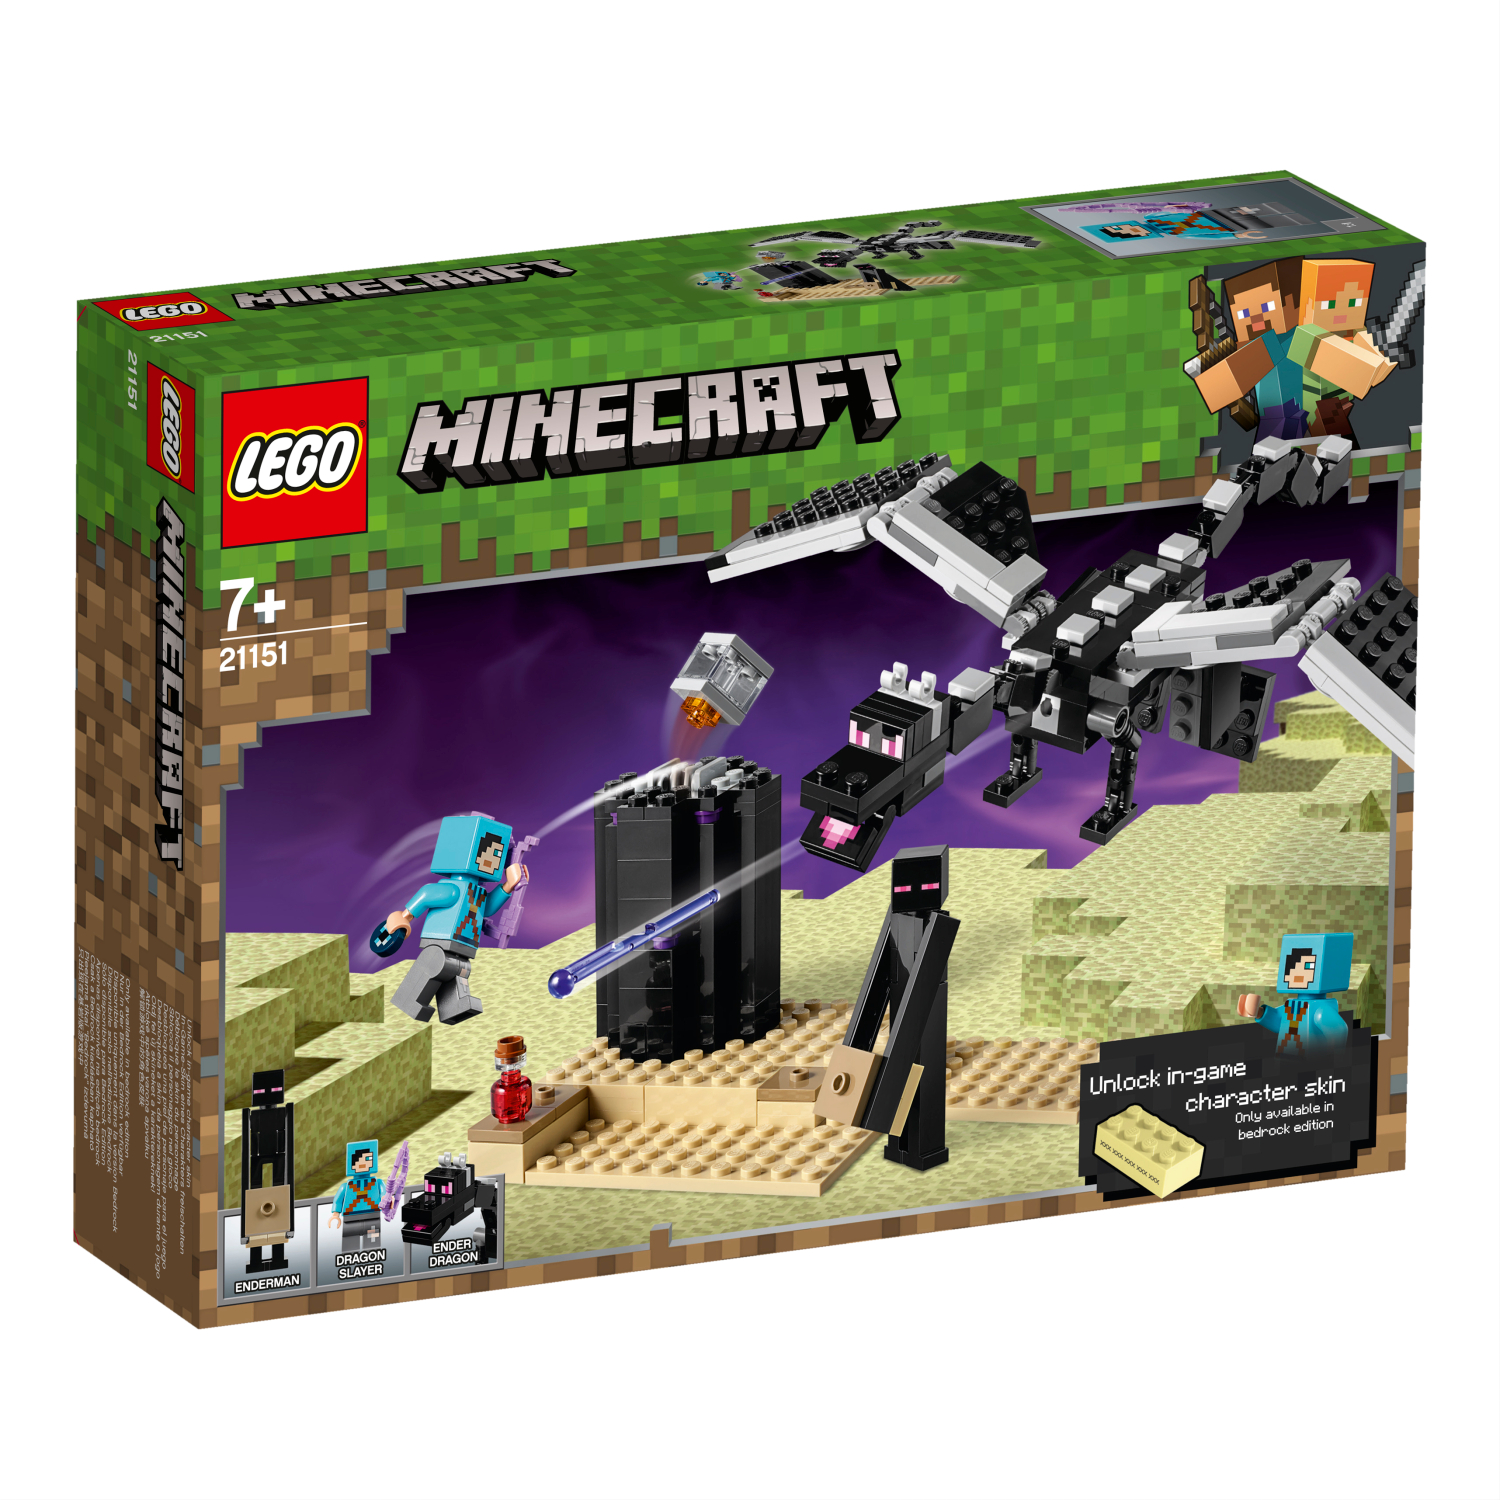 Köp LEGO Minecraft 21151 End striden på lekia.se